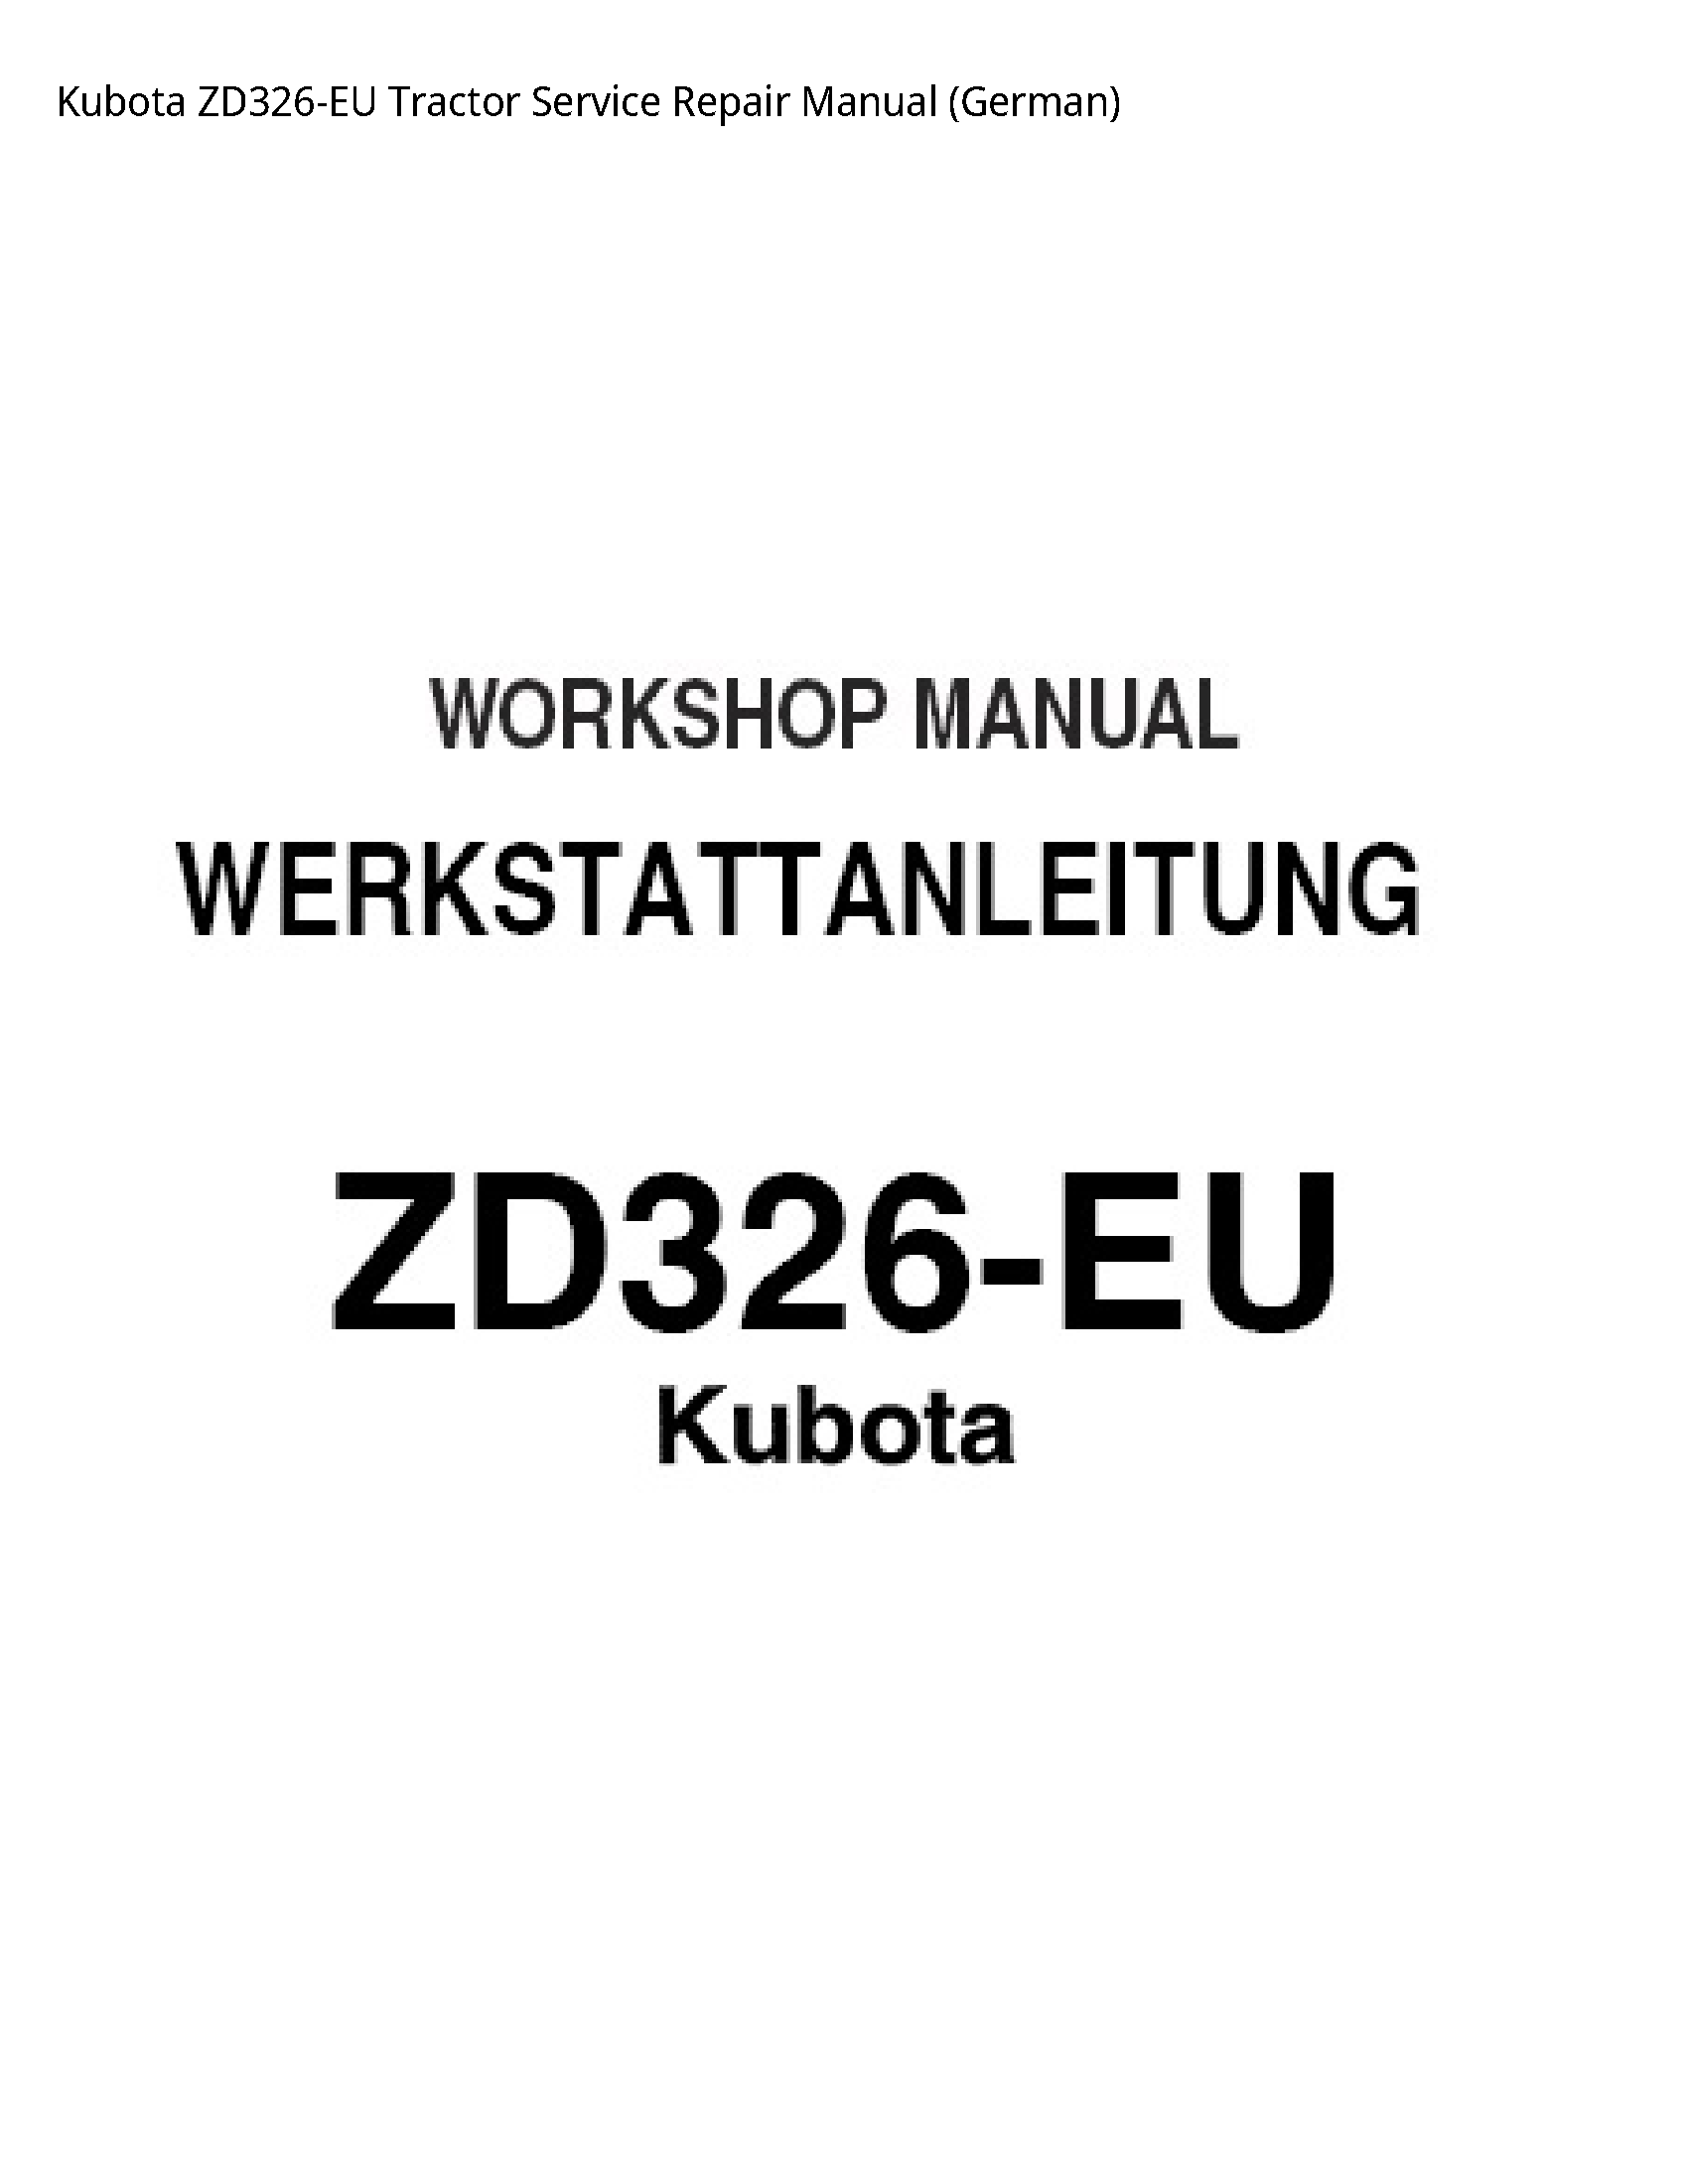 Kubota ZD326-EU Tractor manual